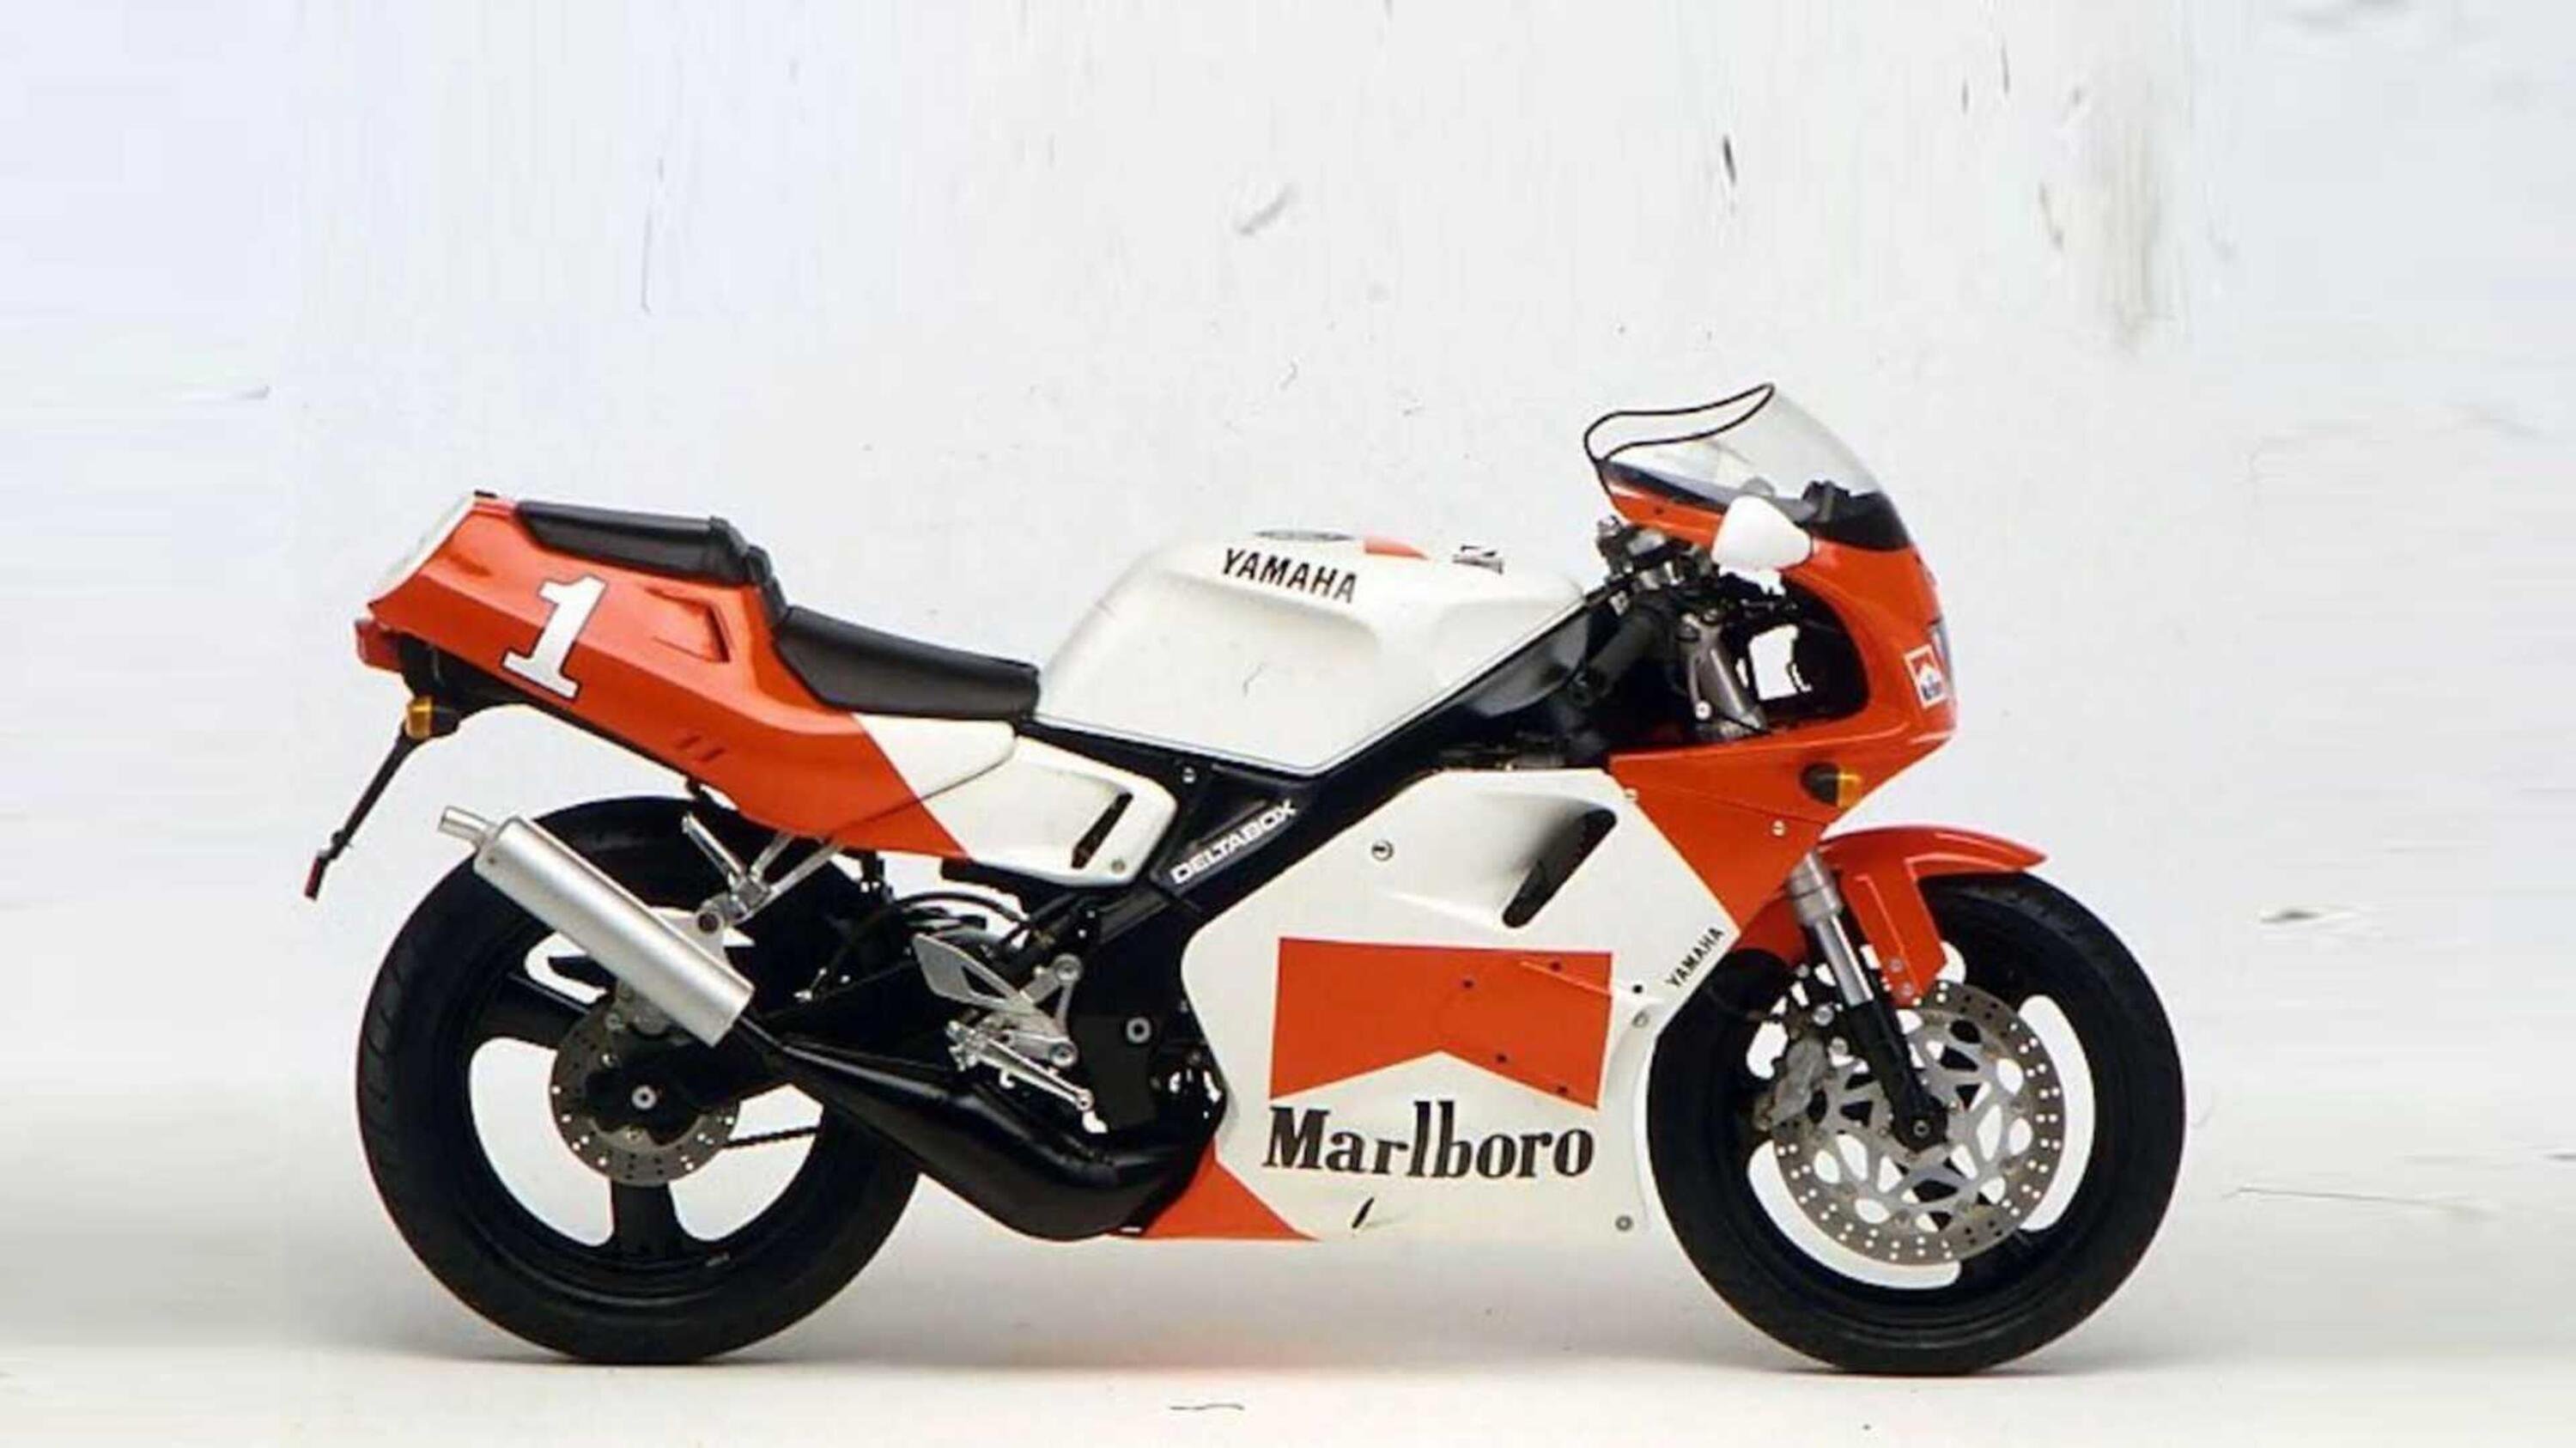 Yamaha TZR 125 TZR 125 R Marlboro (1995 - 96)